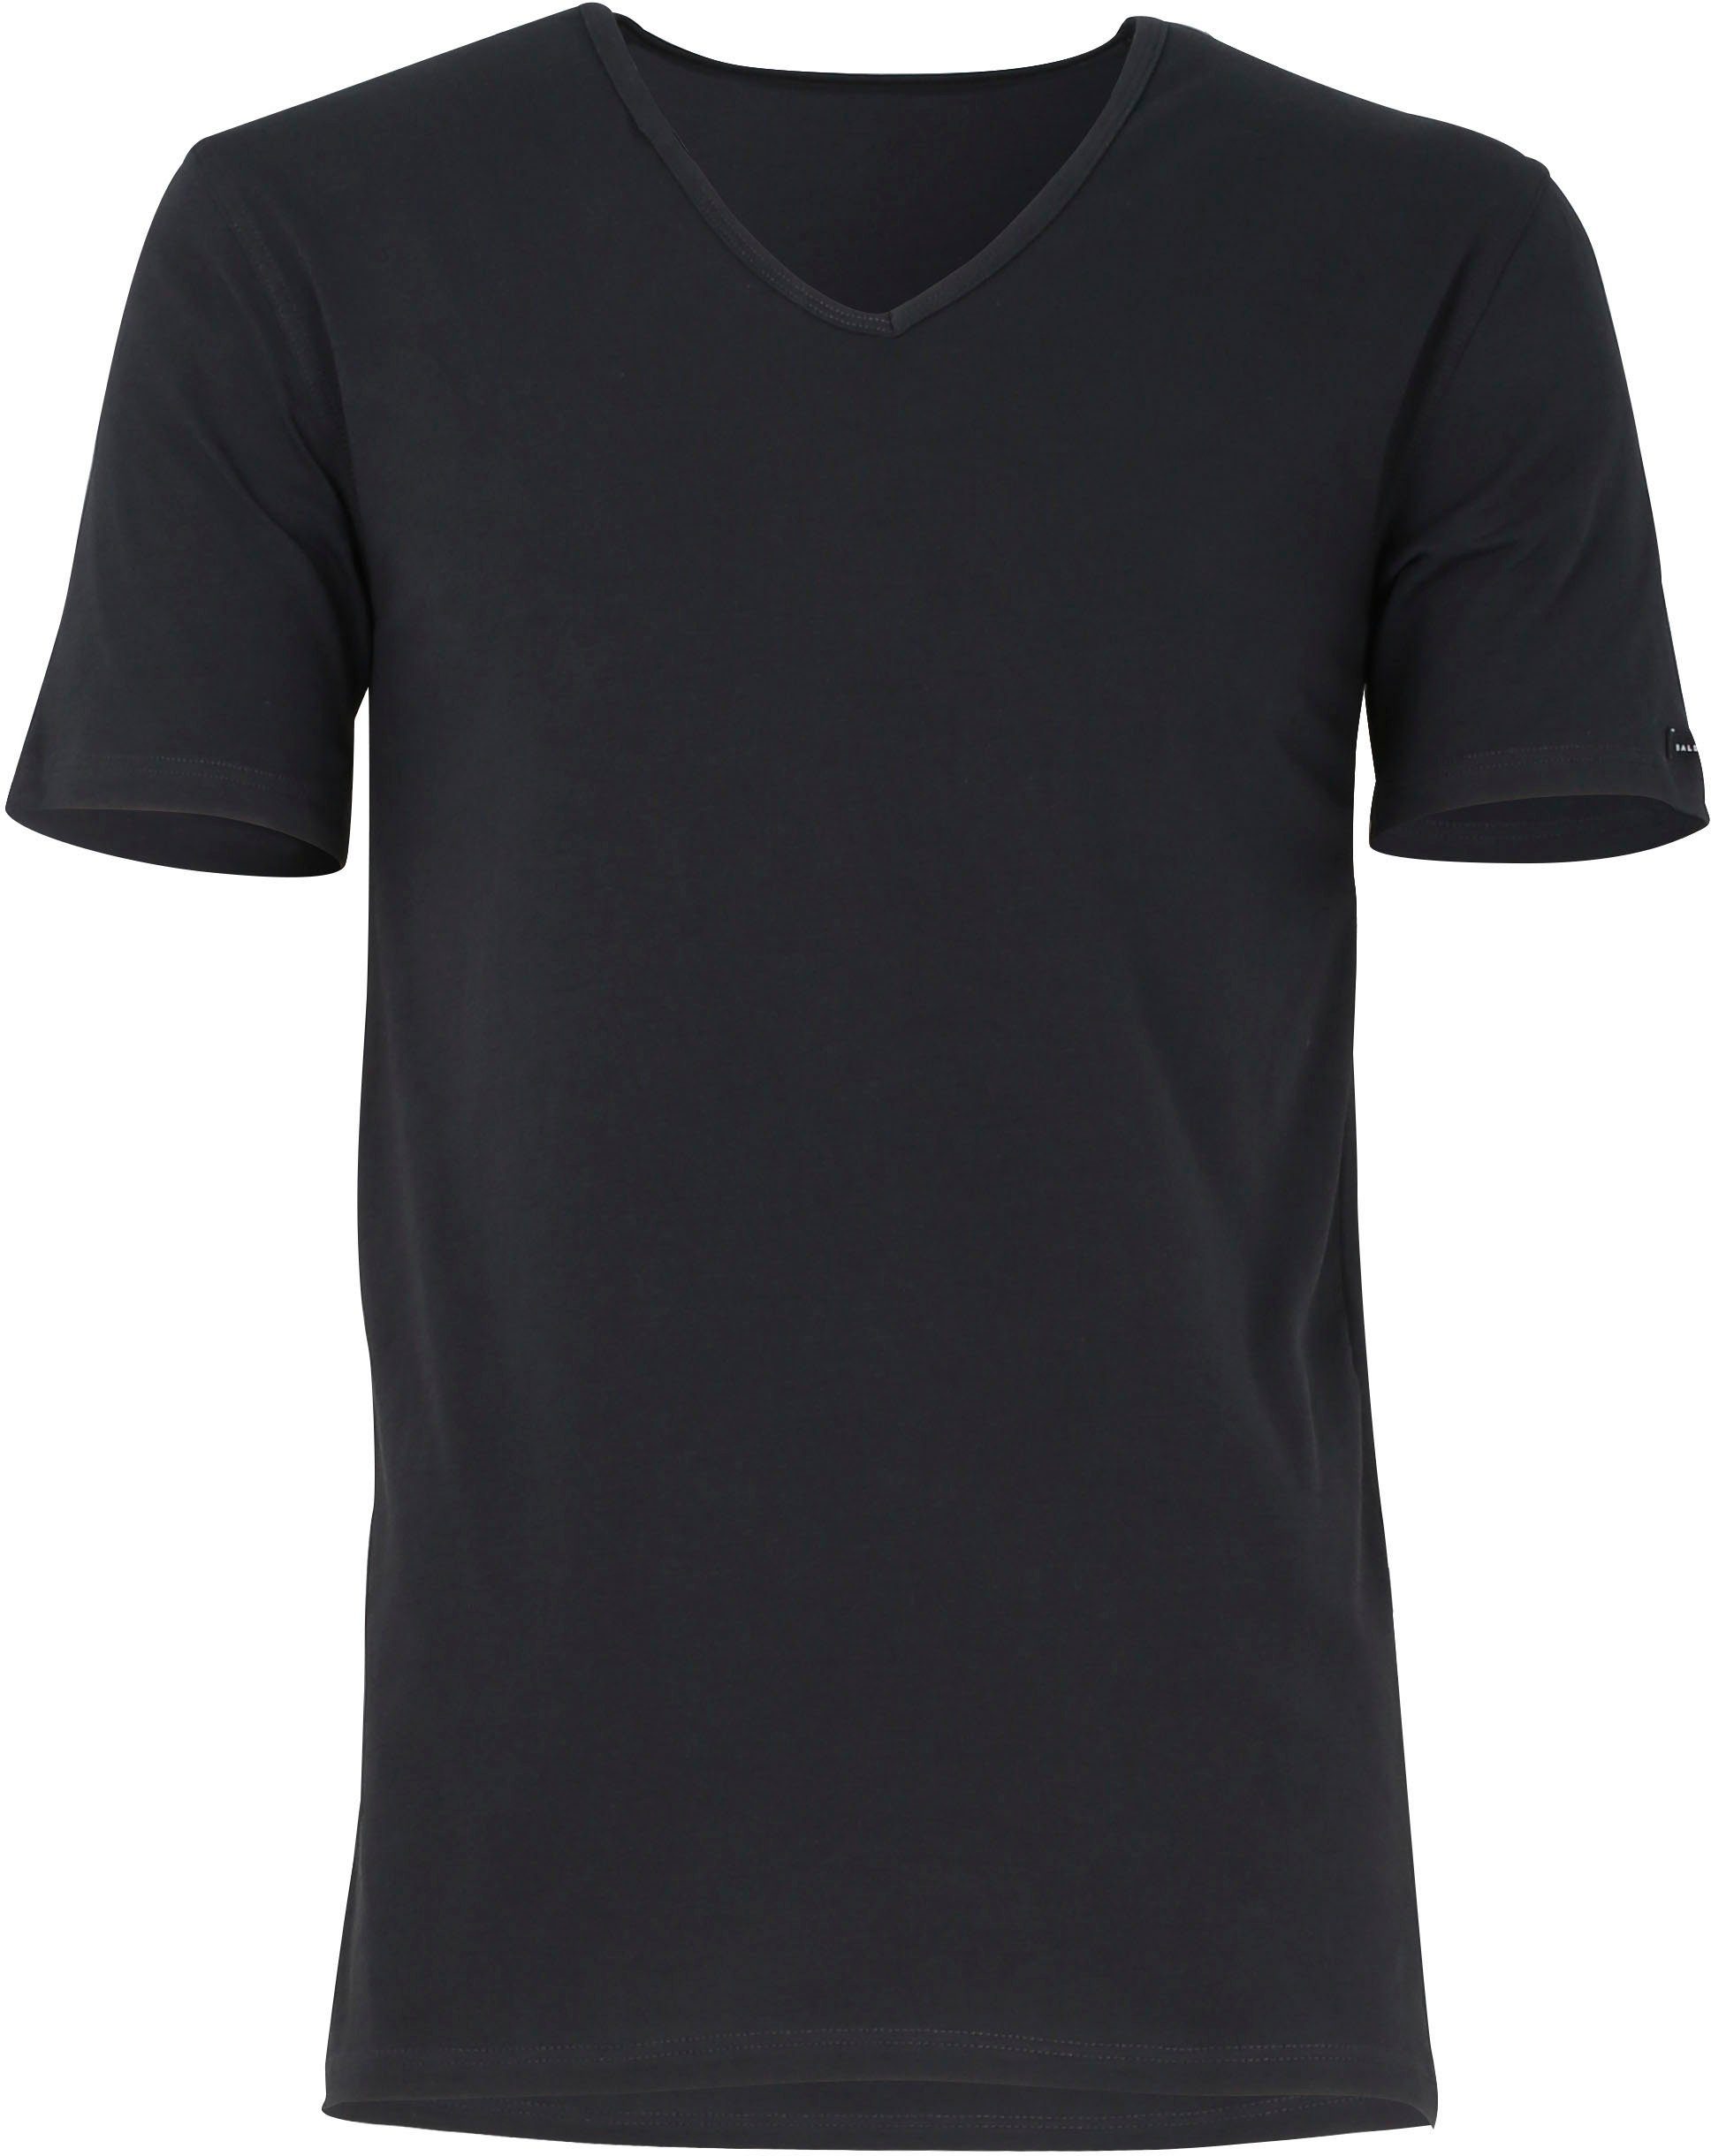 BALDESSARINI Unterhemd V-Aussc Shirt, 1/2, schwarz-dunkel-uni